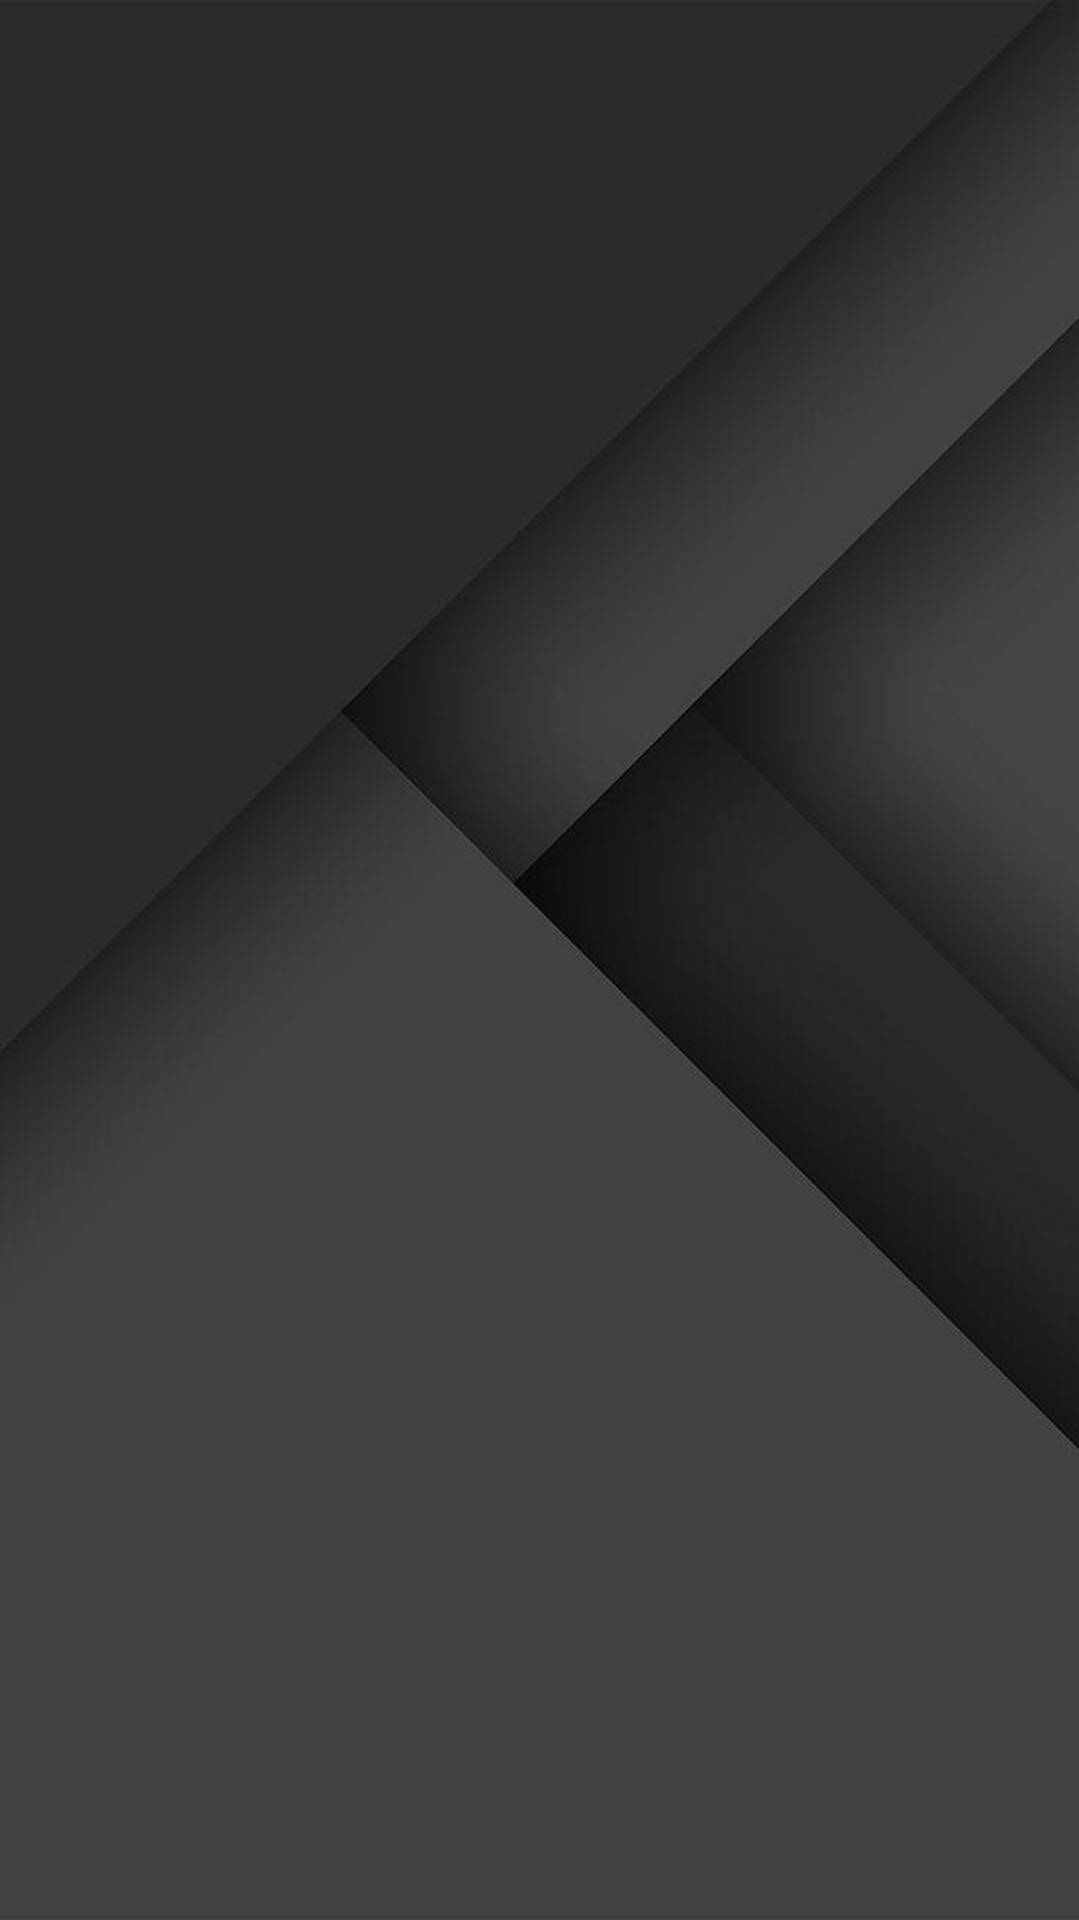 Dark Android Chevron Material Design Background